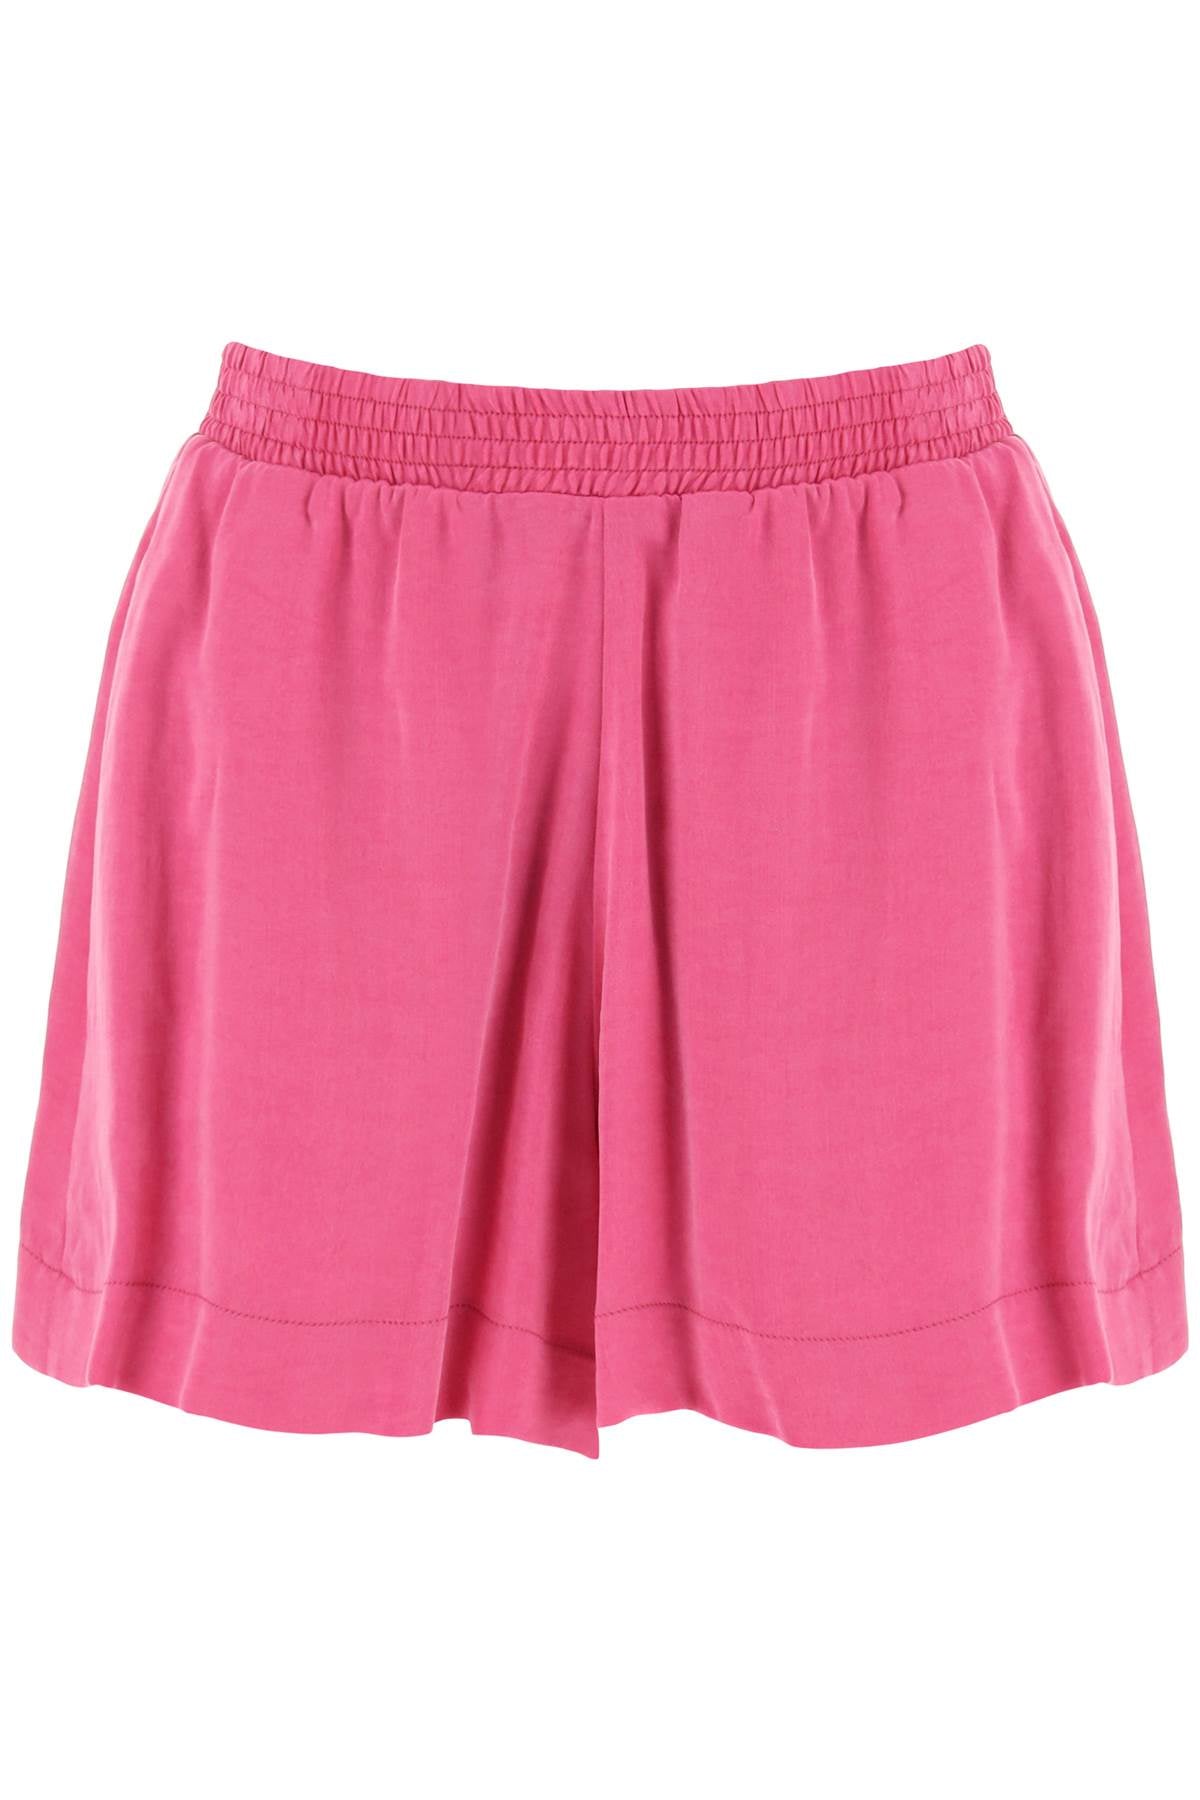 Mvp wardrobe shorts with elasticated waistband-0